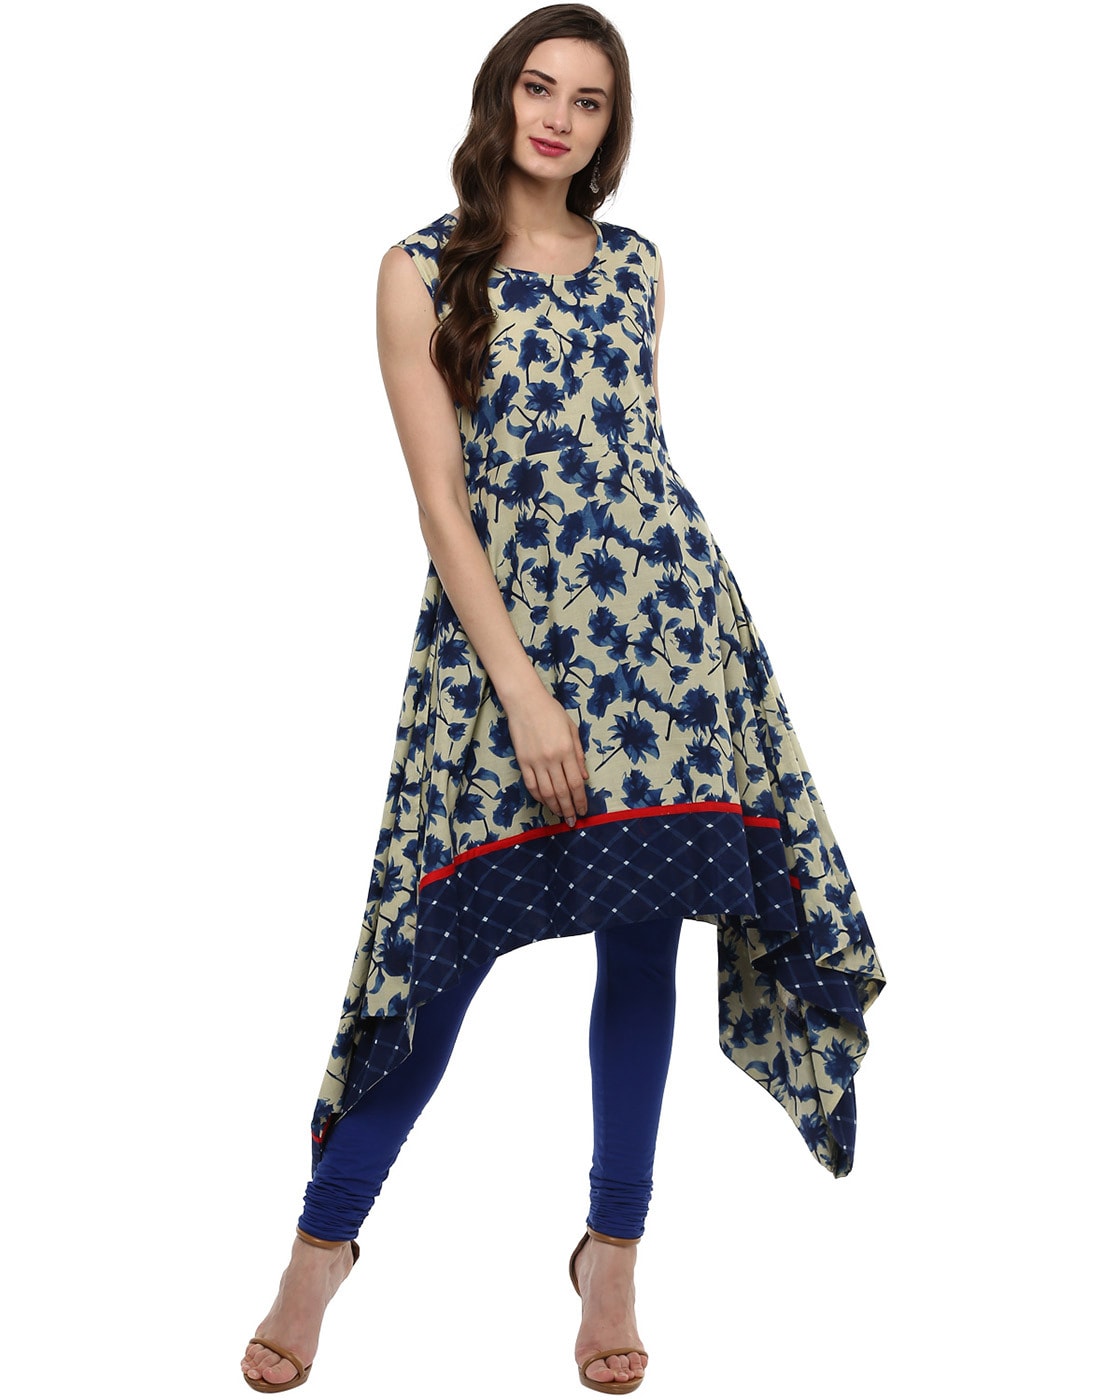 Most favourite ideal Dresses kurti Design/ high-low kurti design for you. -  YouTube